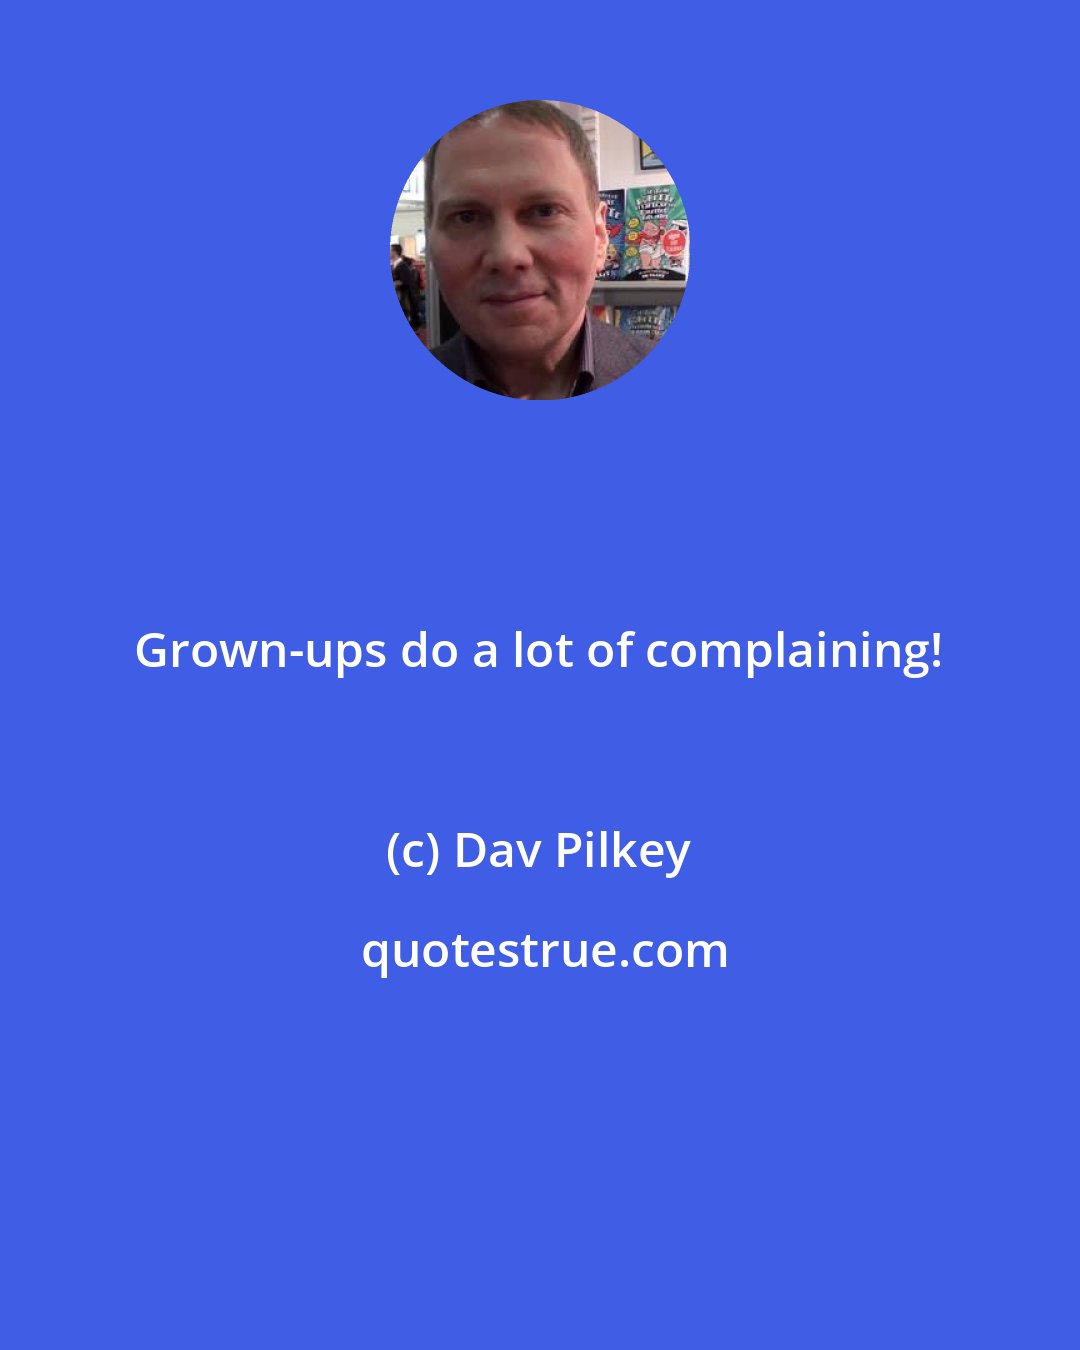 Dav Pilkey: Grown-ups do a lot of complaining!